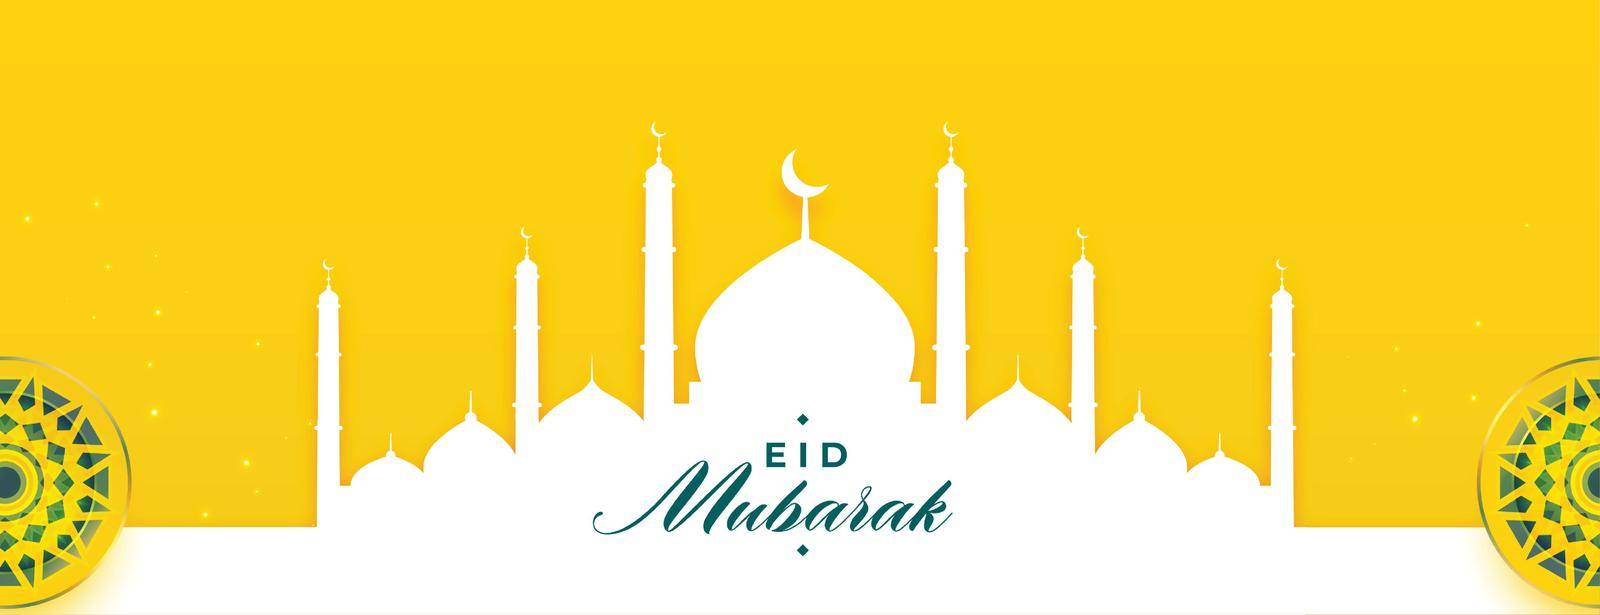 flat yellow eid mubarak muslim festival banner with mosque design